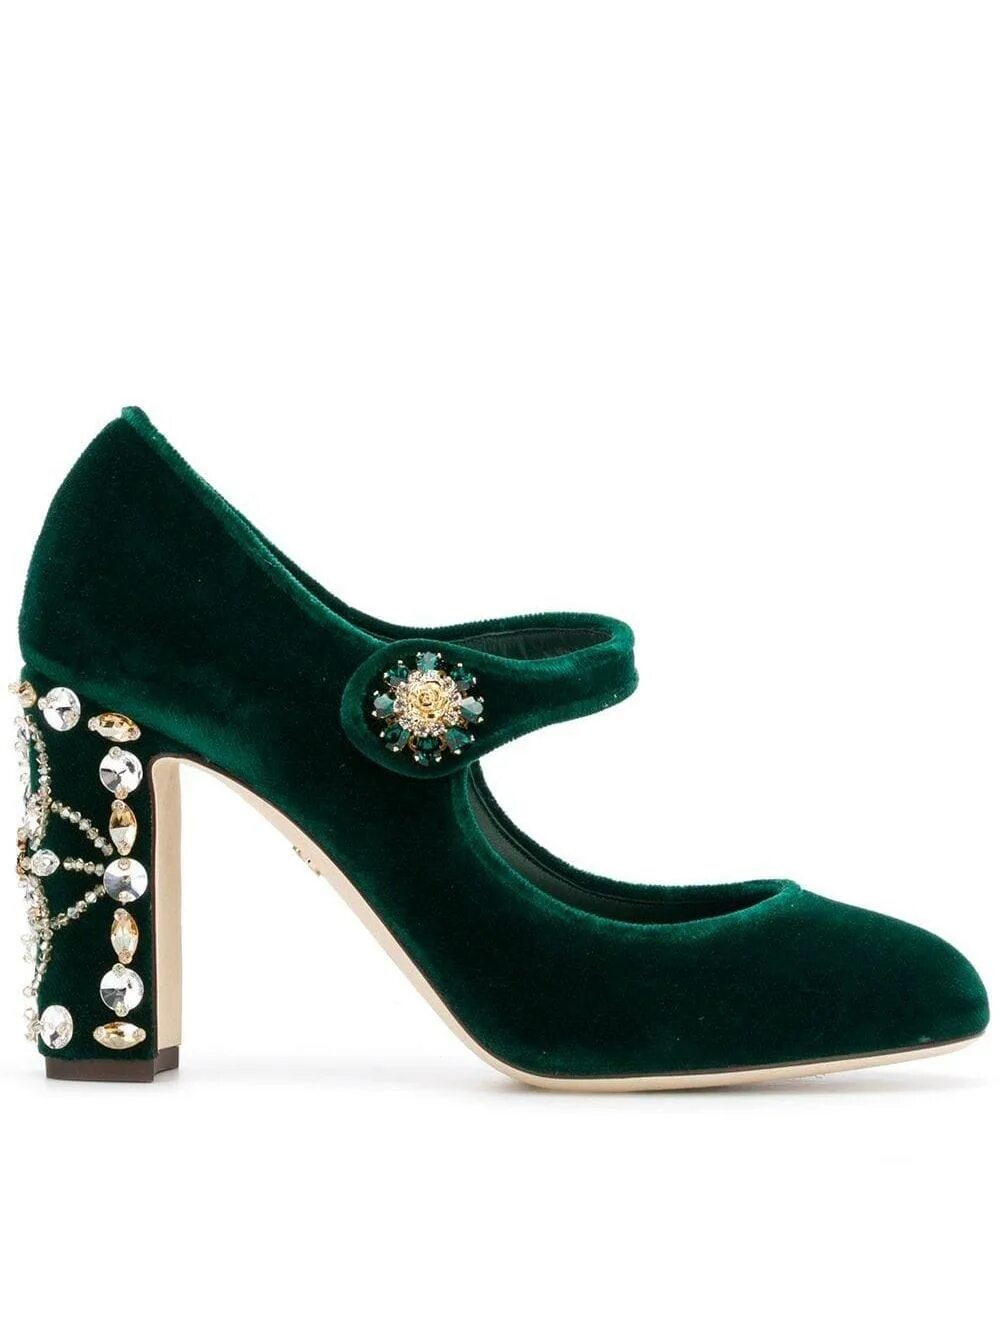 Dolce Gabbana Mary Jane туфли. Дольче Габбана туфли зеленые. Дольче Габбана обувь бархатная. Туфли dolce